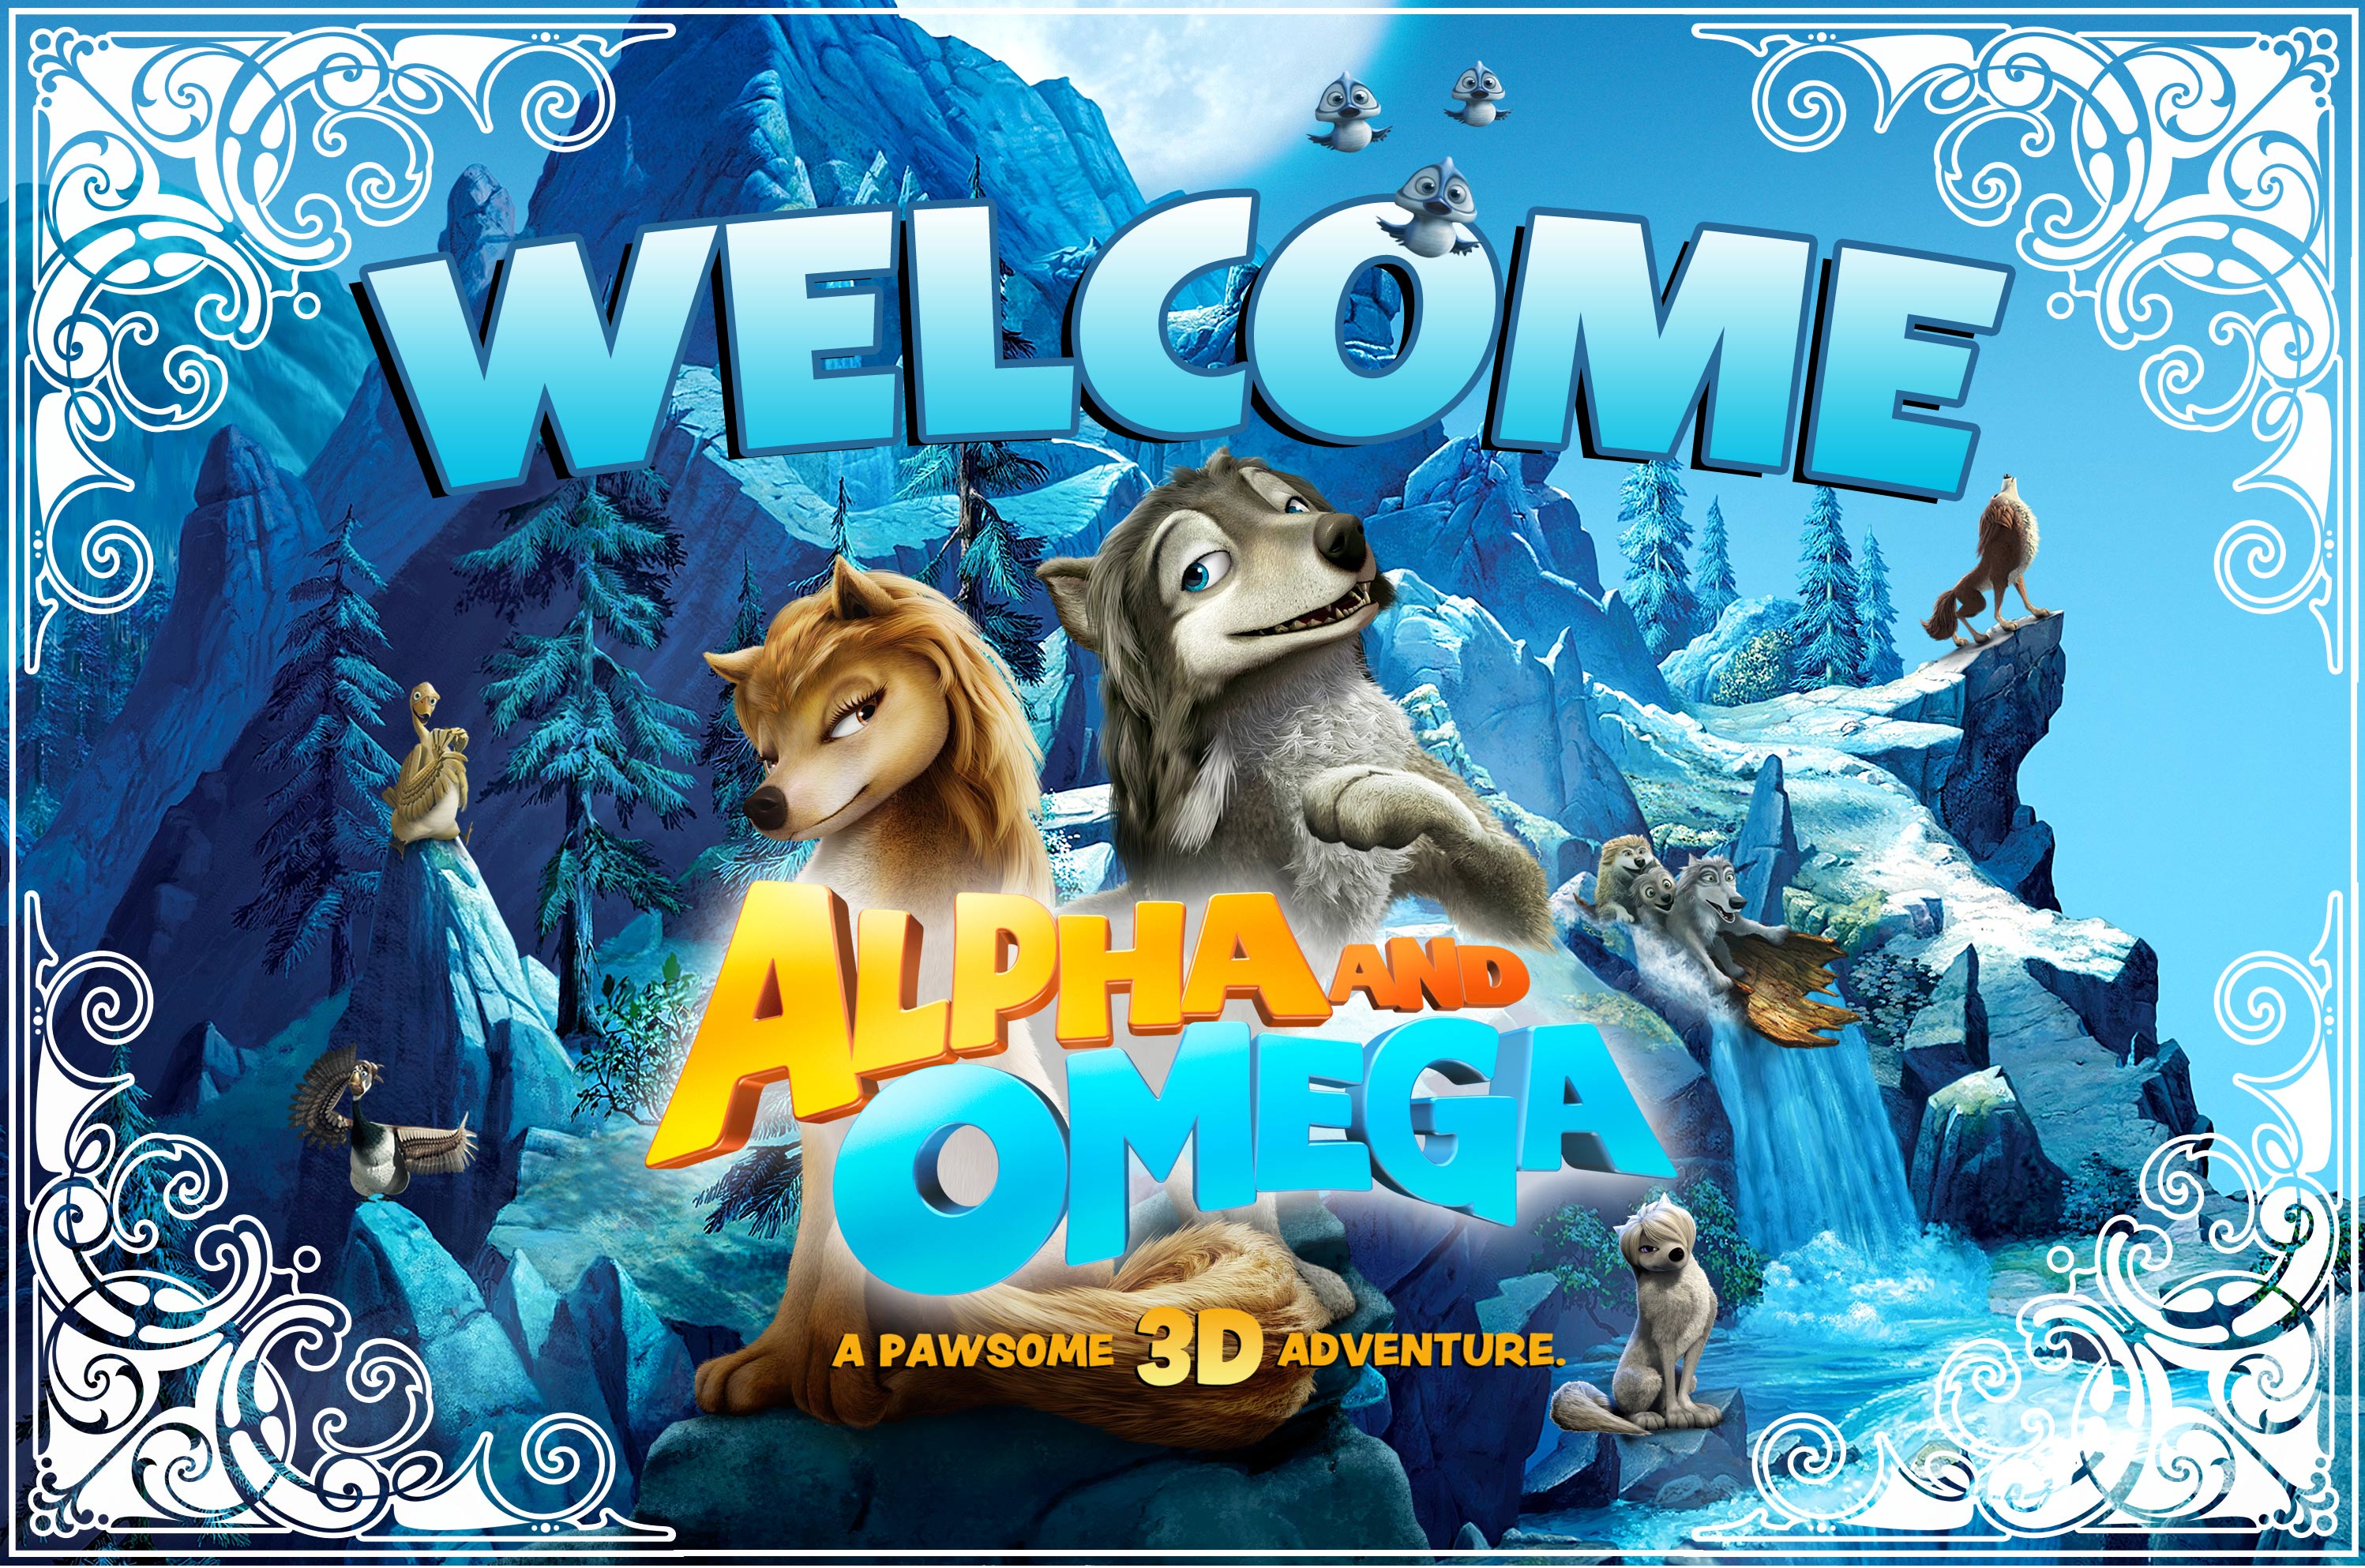 alpha movie free download